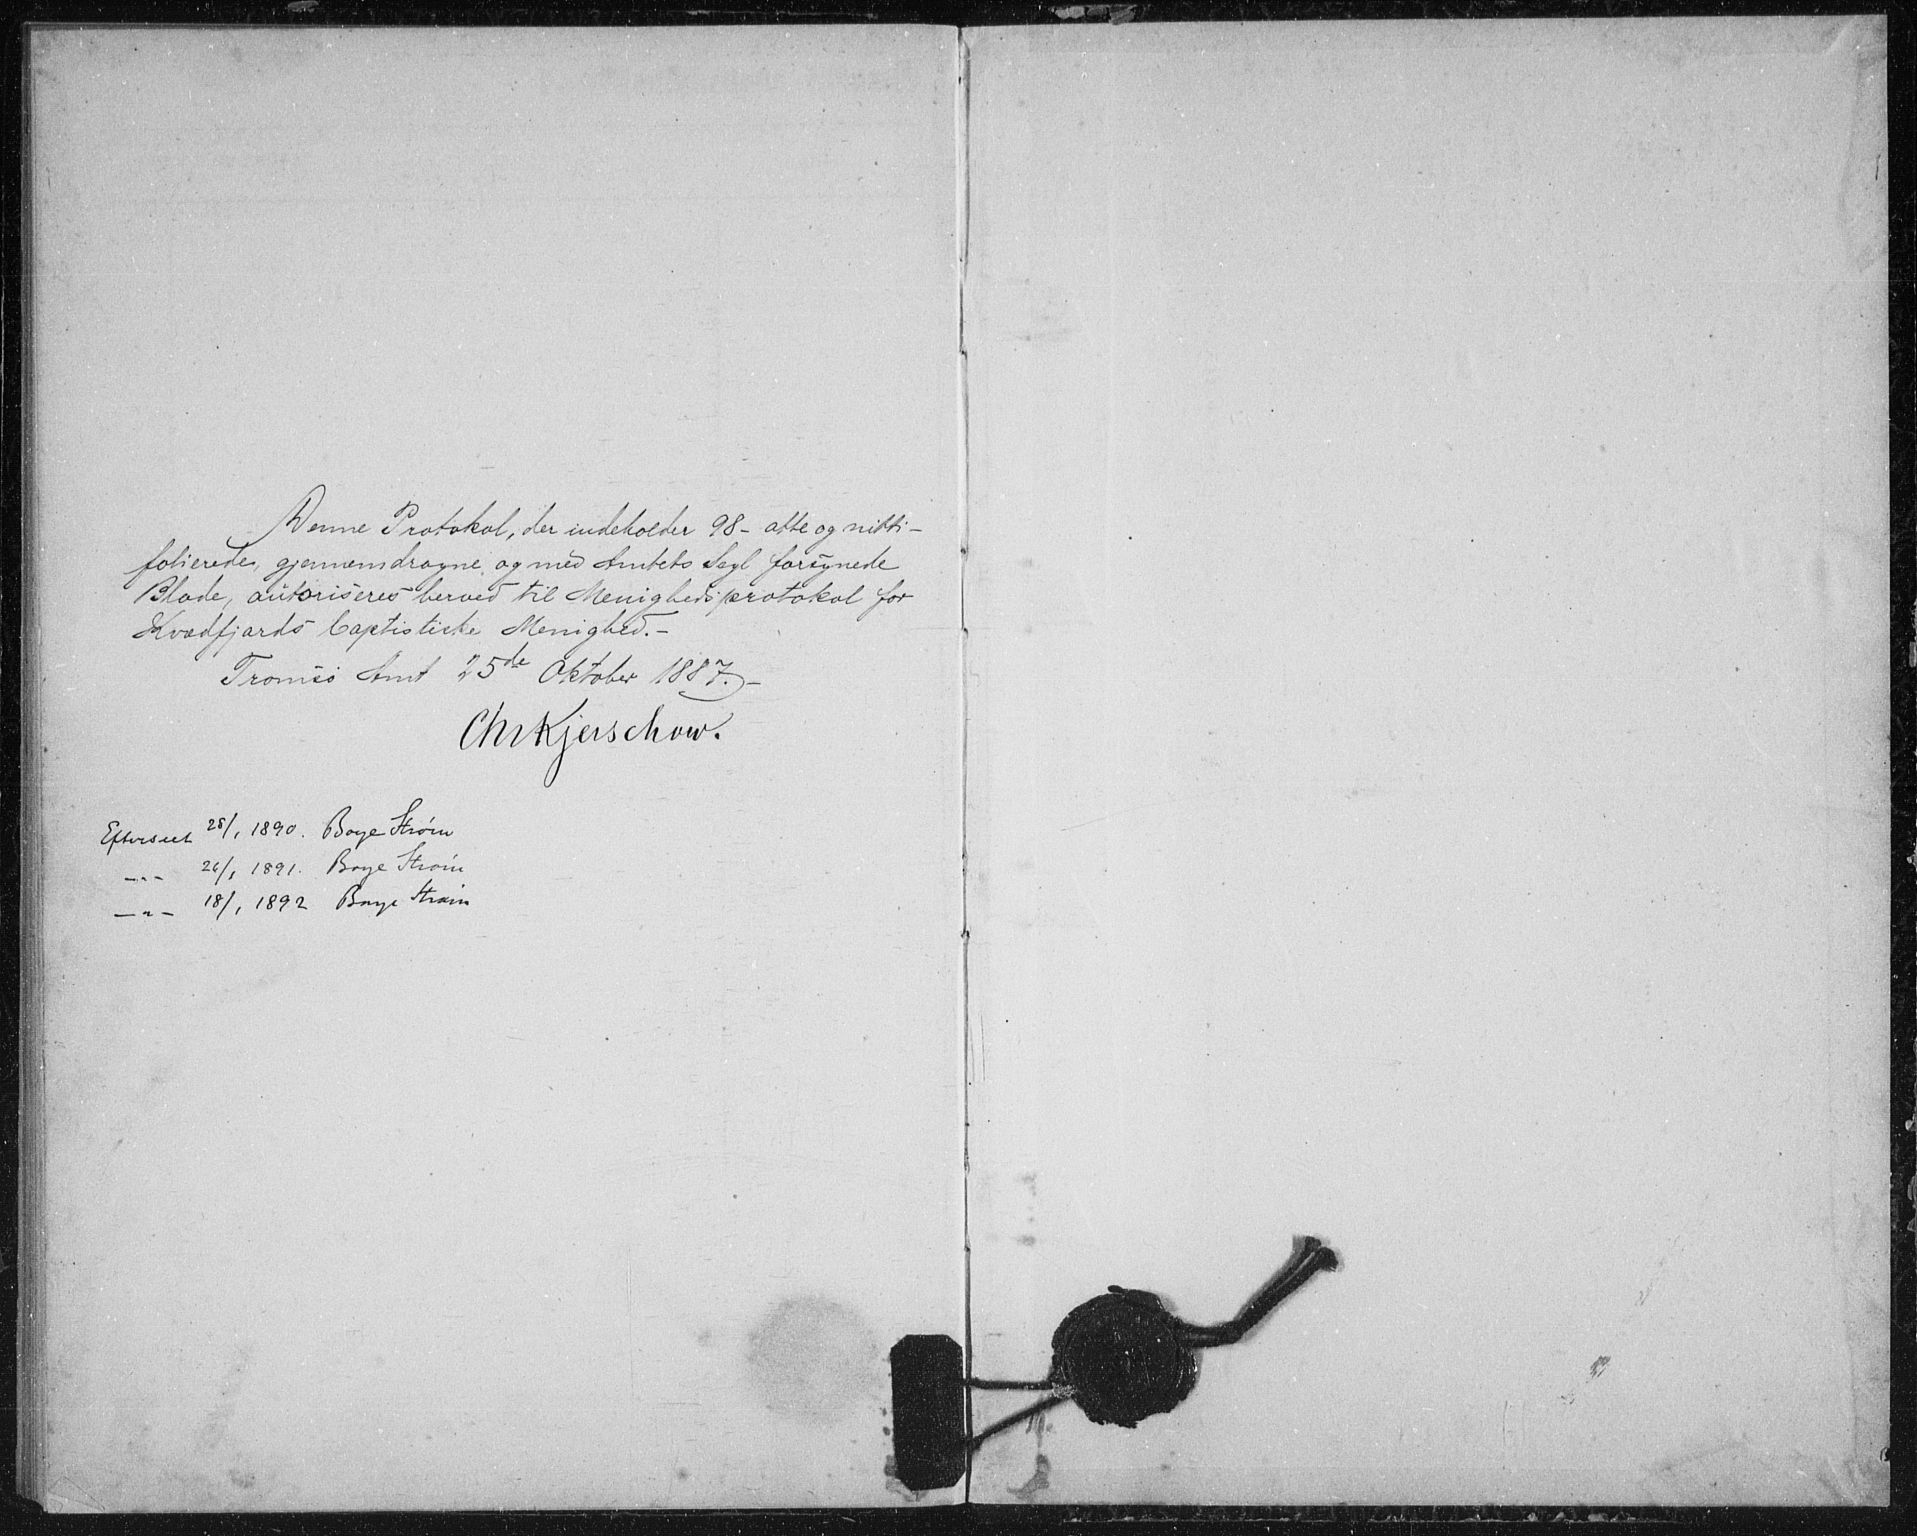 Uten arkivreferanse, SATØ/-: Dissenter register no. DP 4, 1877-1892